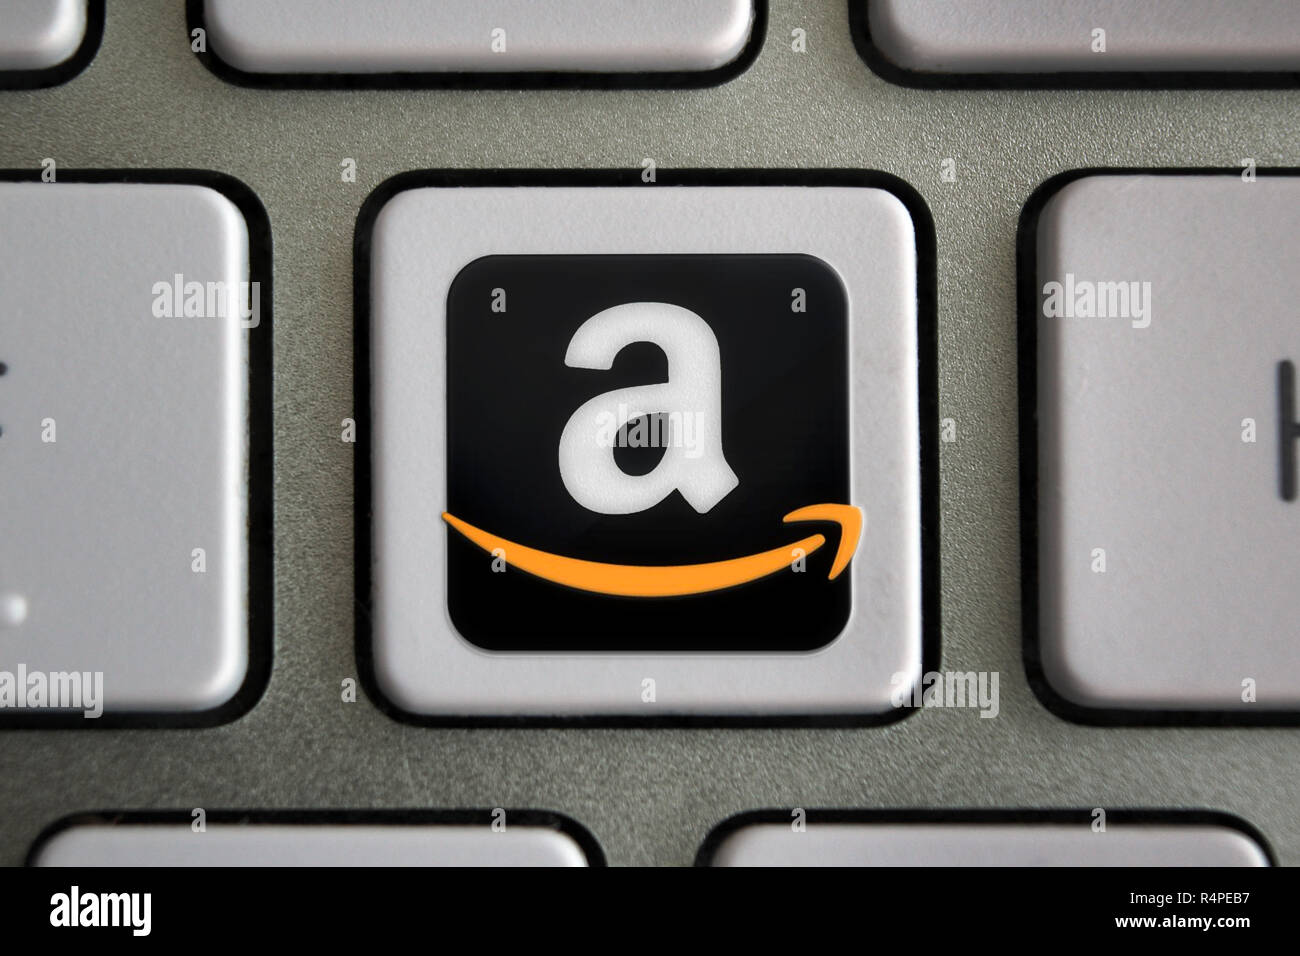 Amazon logo icon on computer keyboard key button illustration Stock Photo -  Alamy